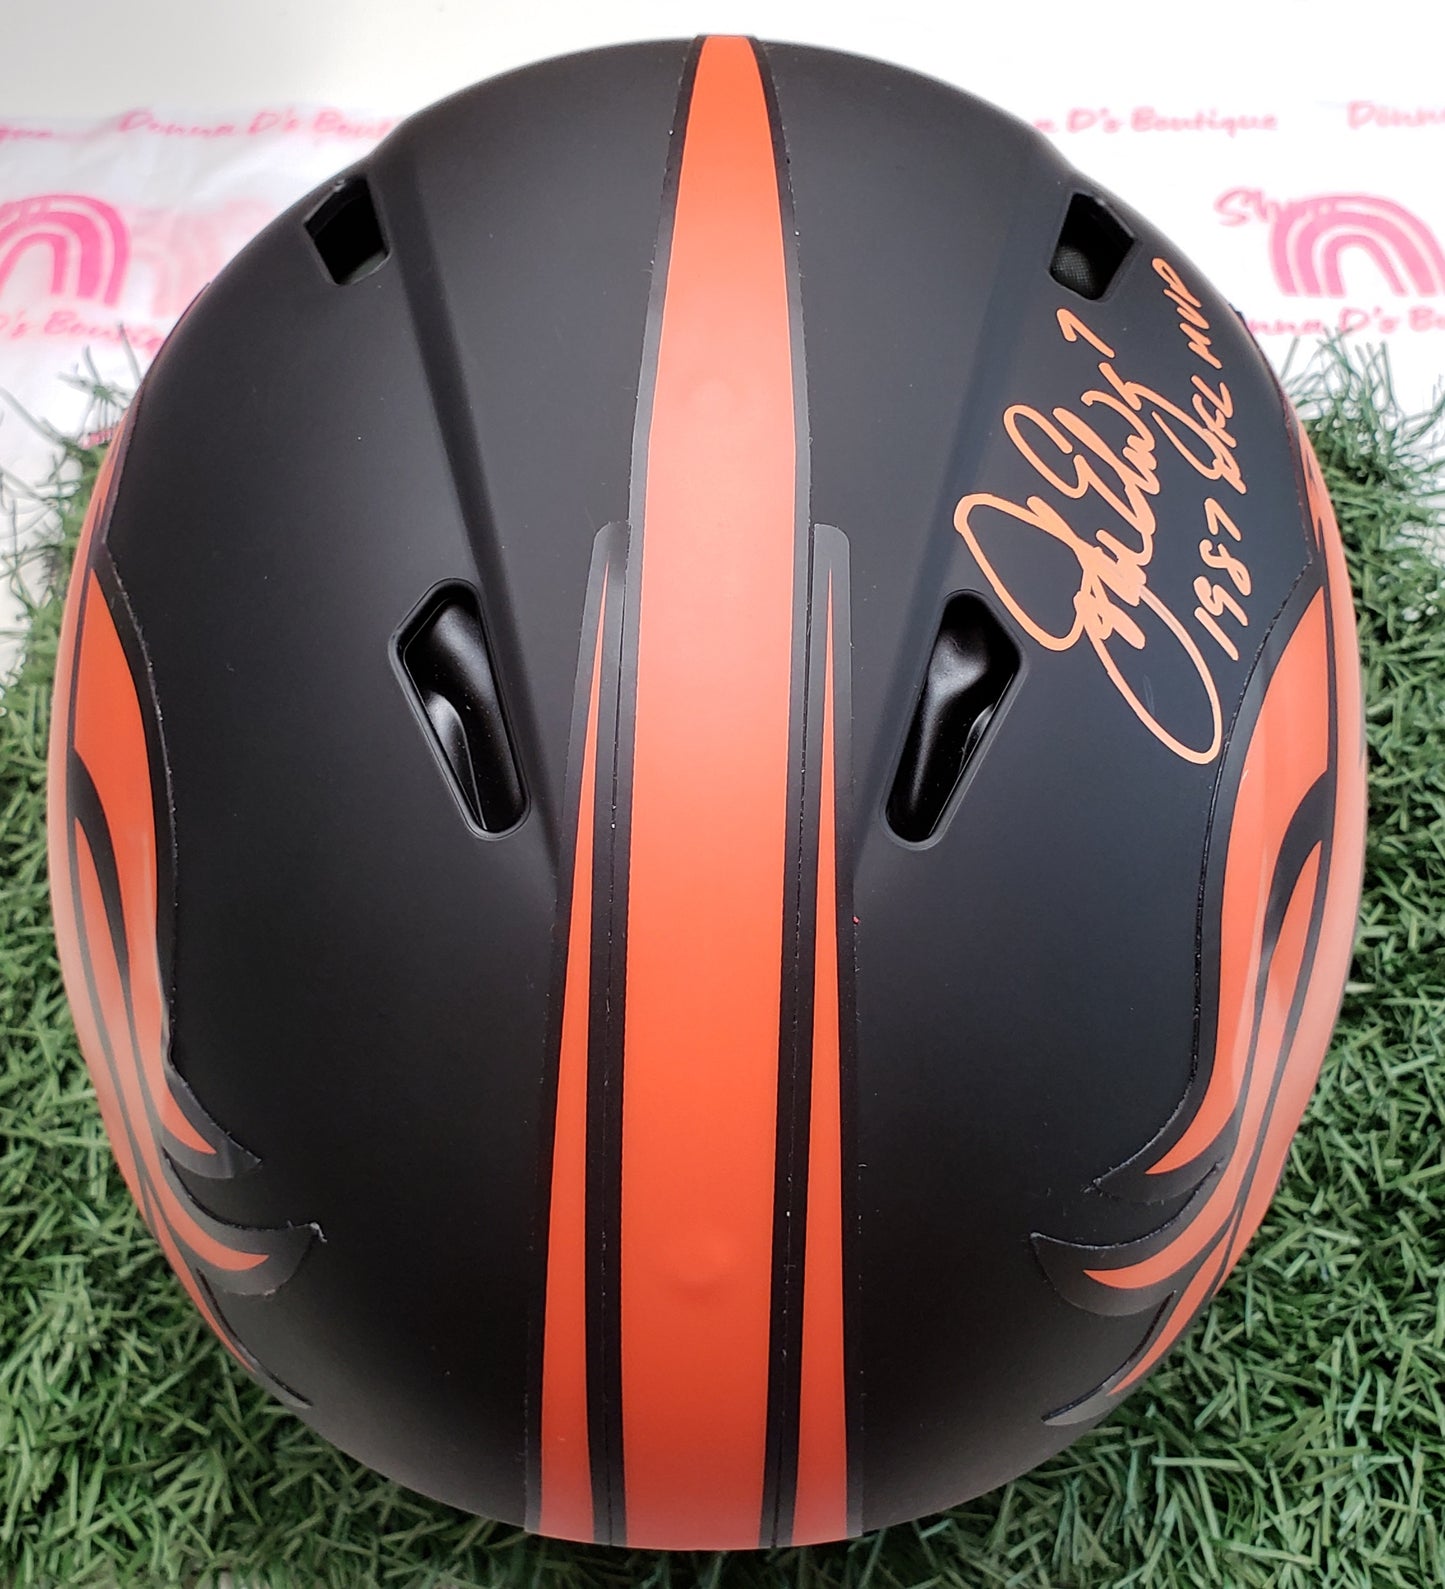 John Elway Autographed Broncos Eclipse Authentic Full-Size Football Helmet - BAS